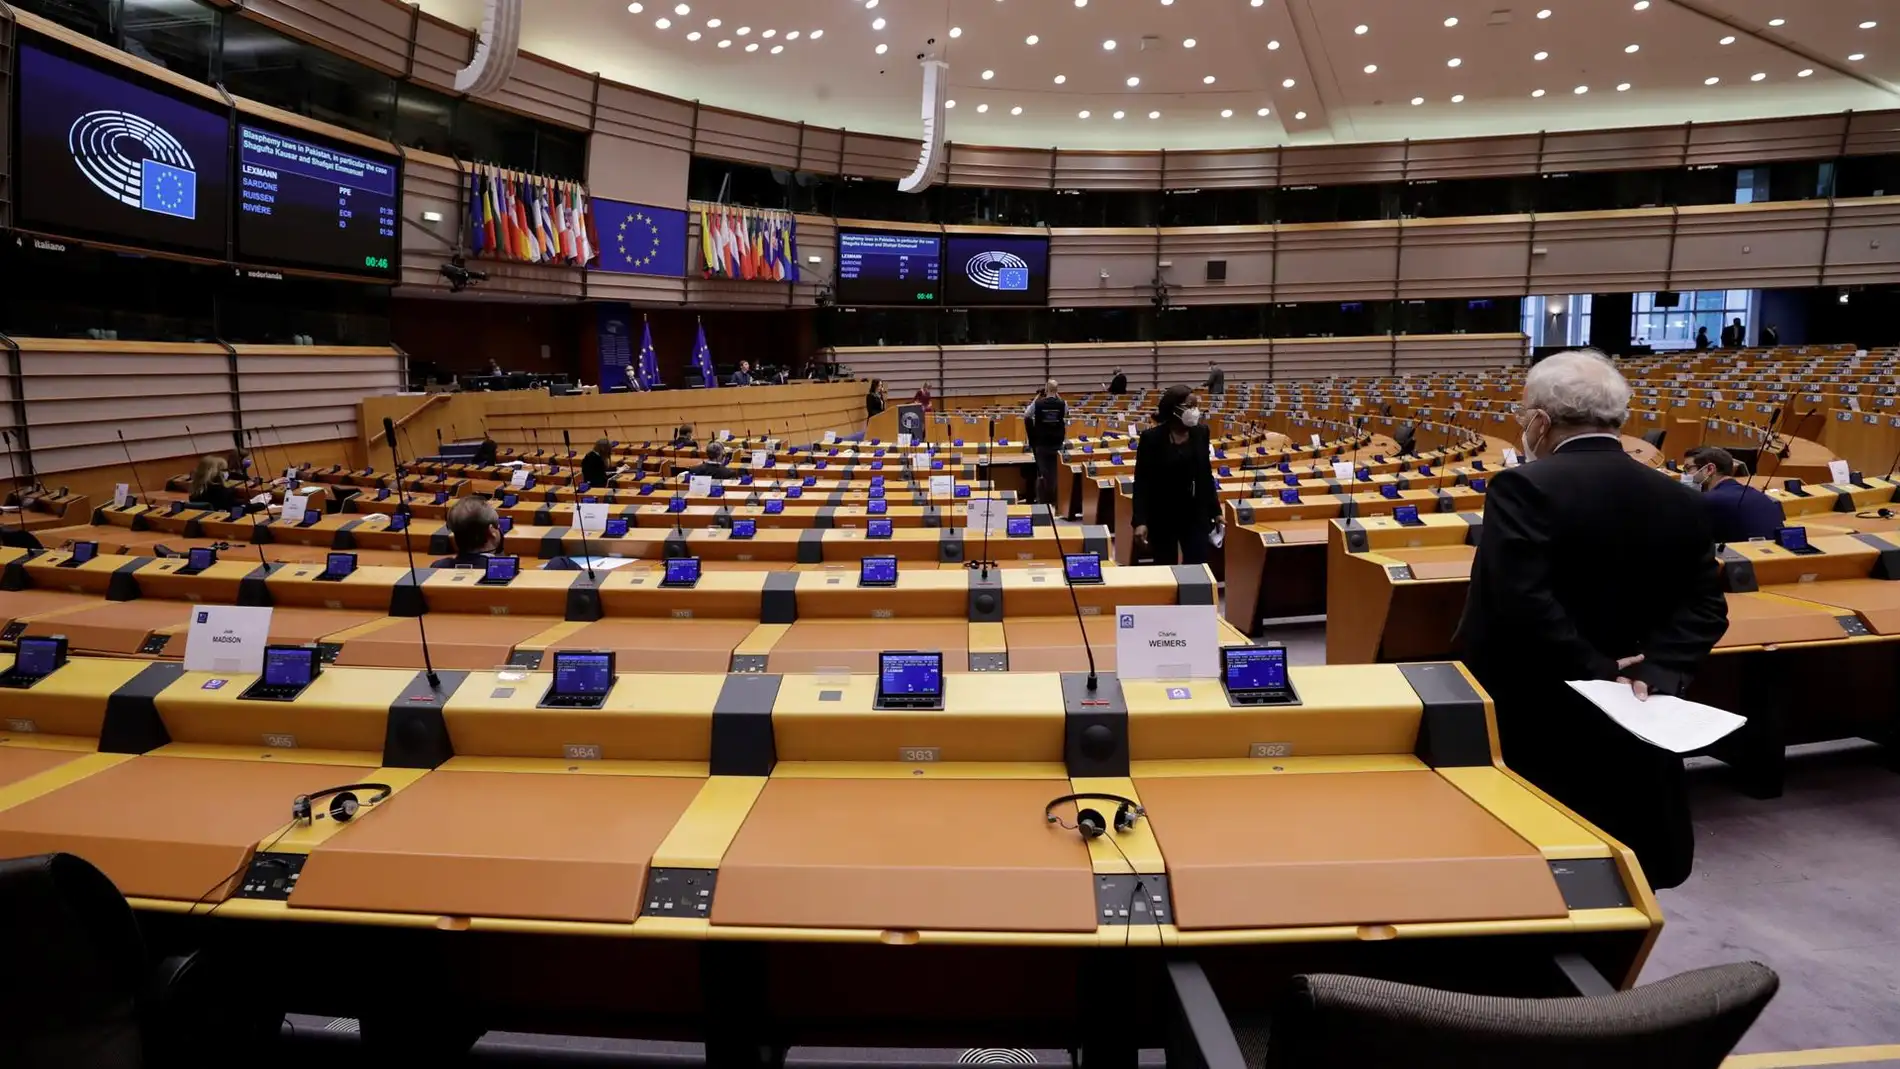 Vista del Parlamento Europeo